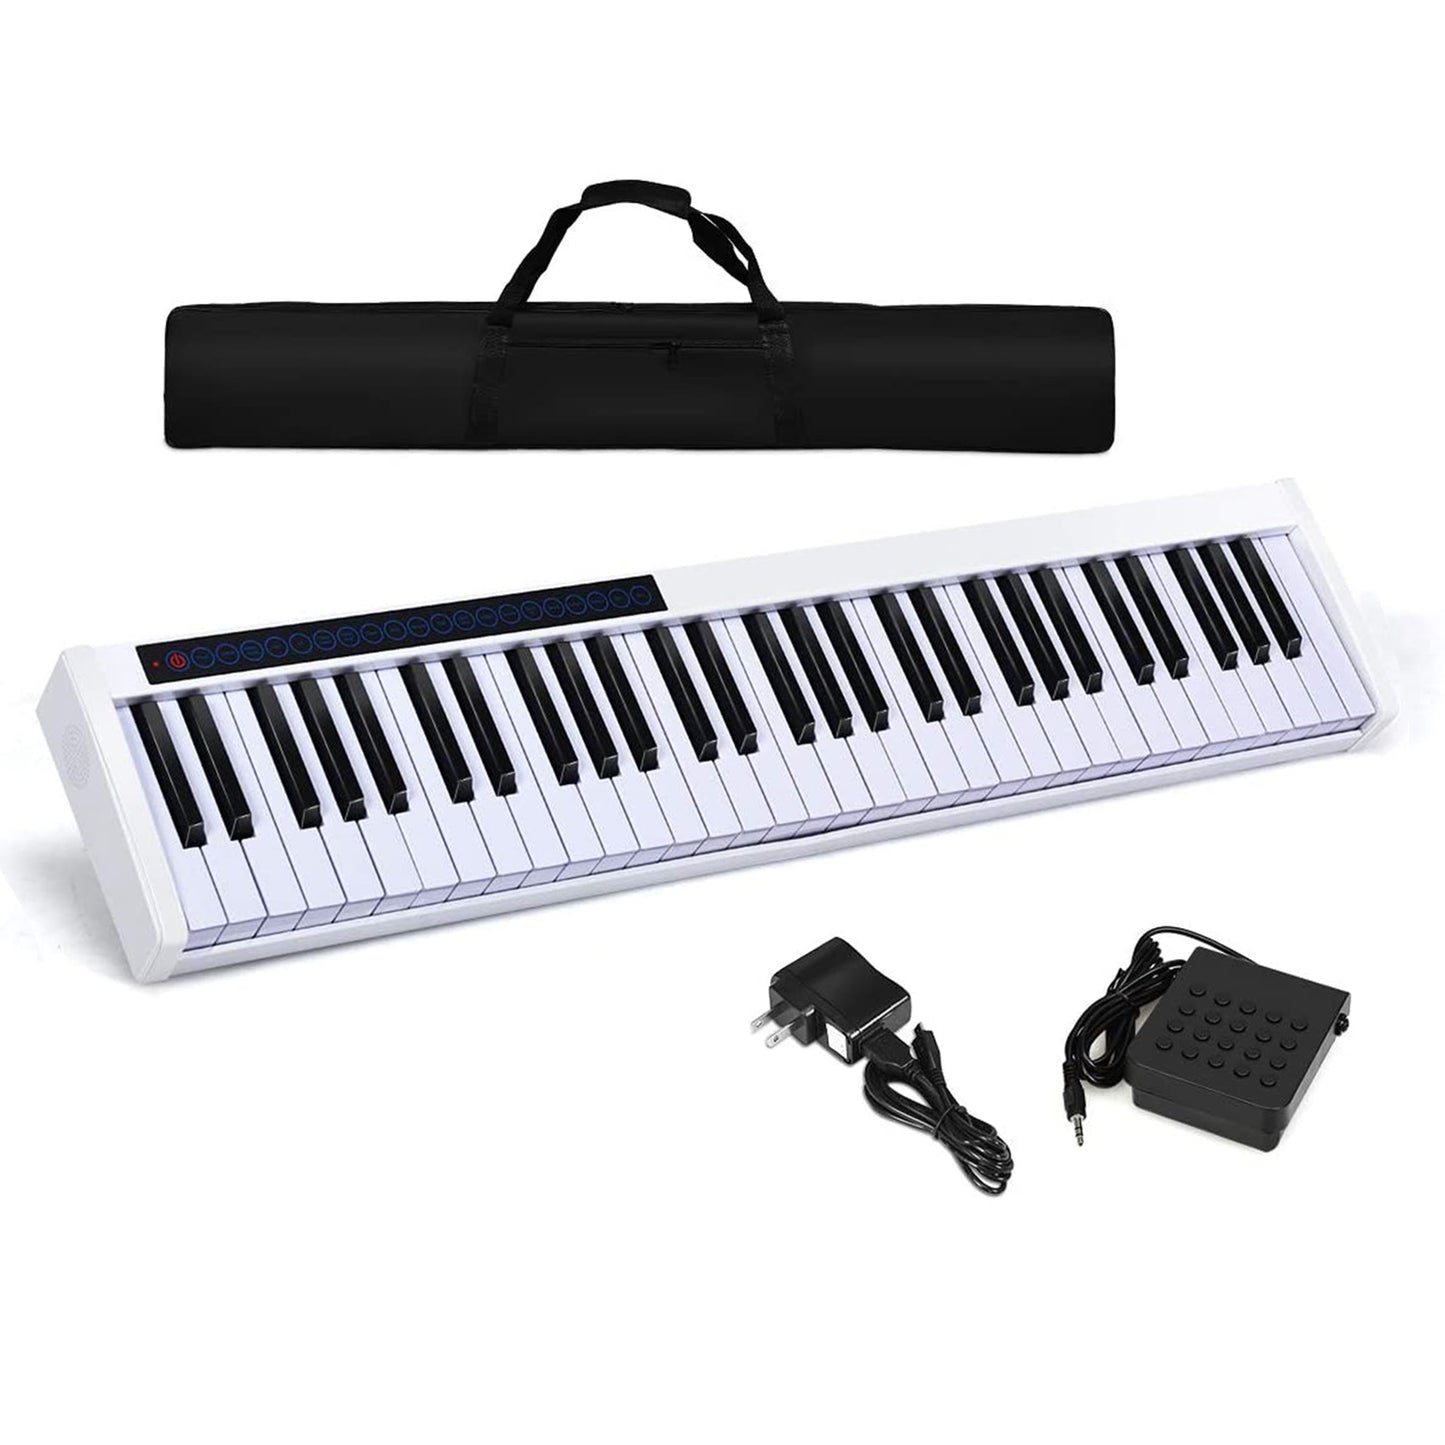 Brio BX1A-61 Sonare Electronic Keyboard